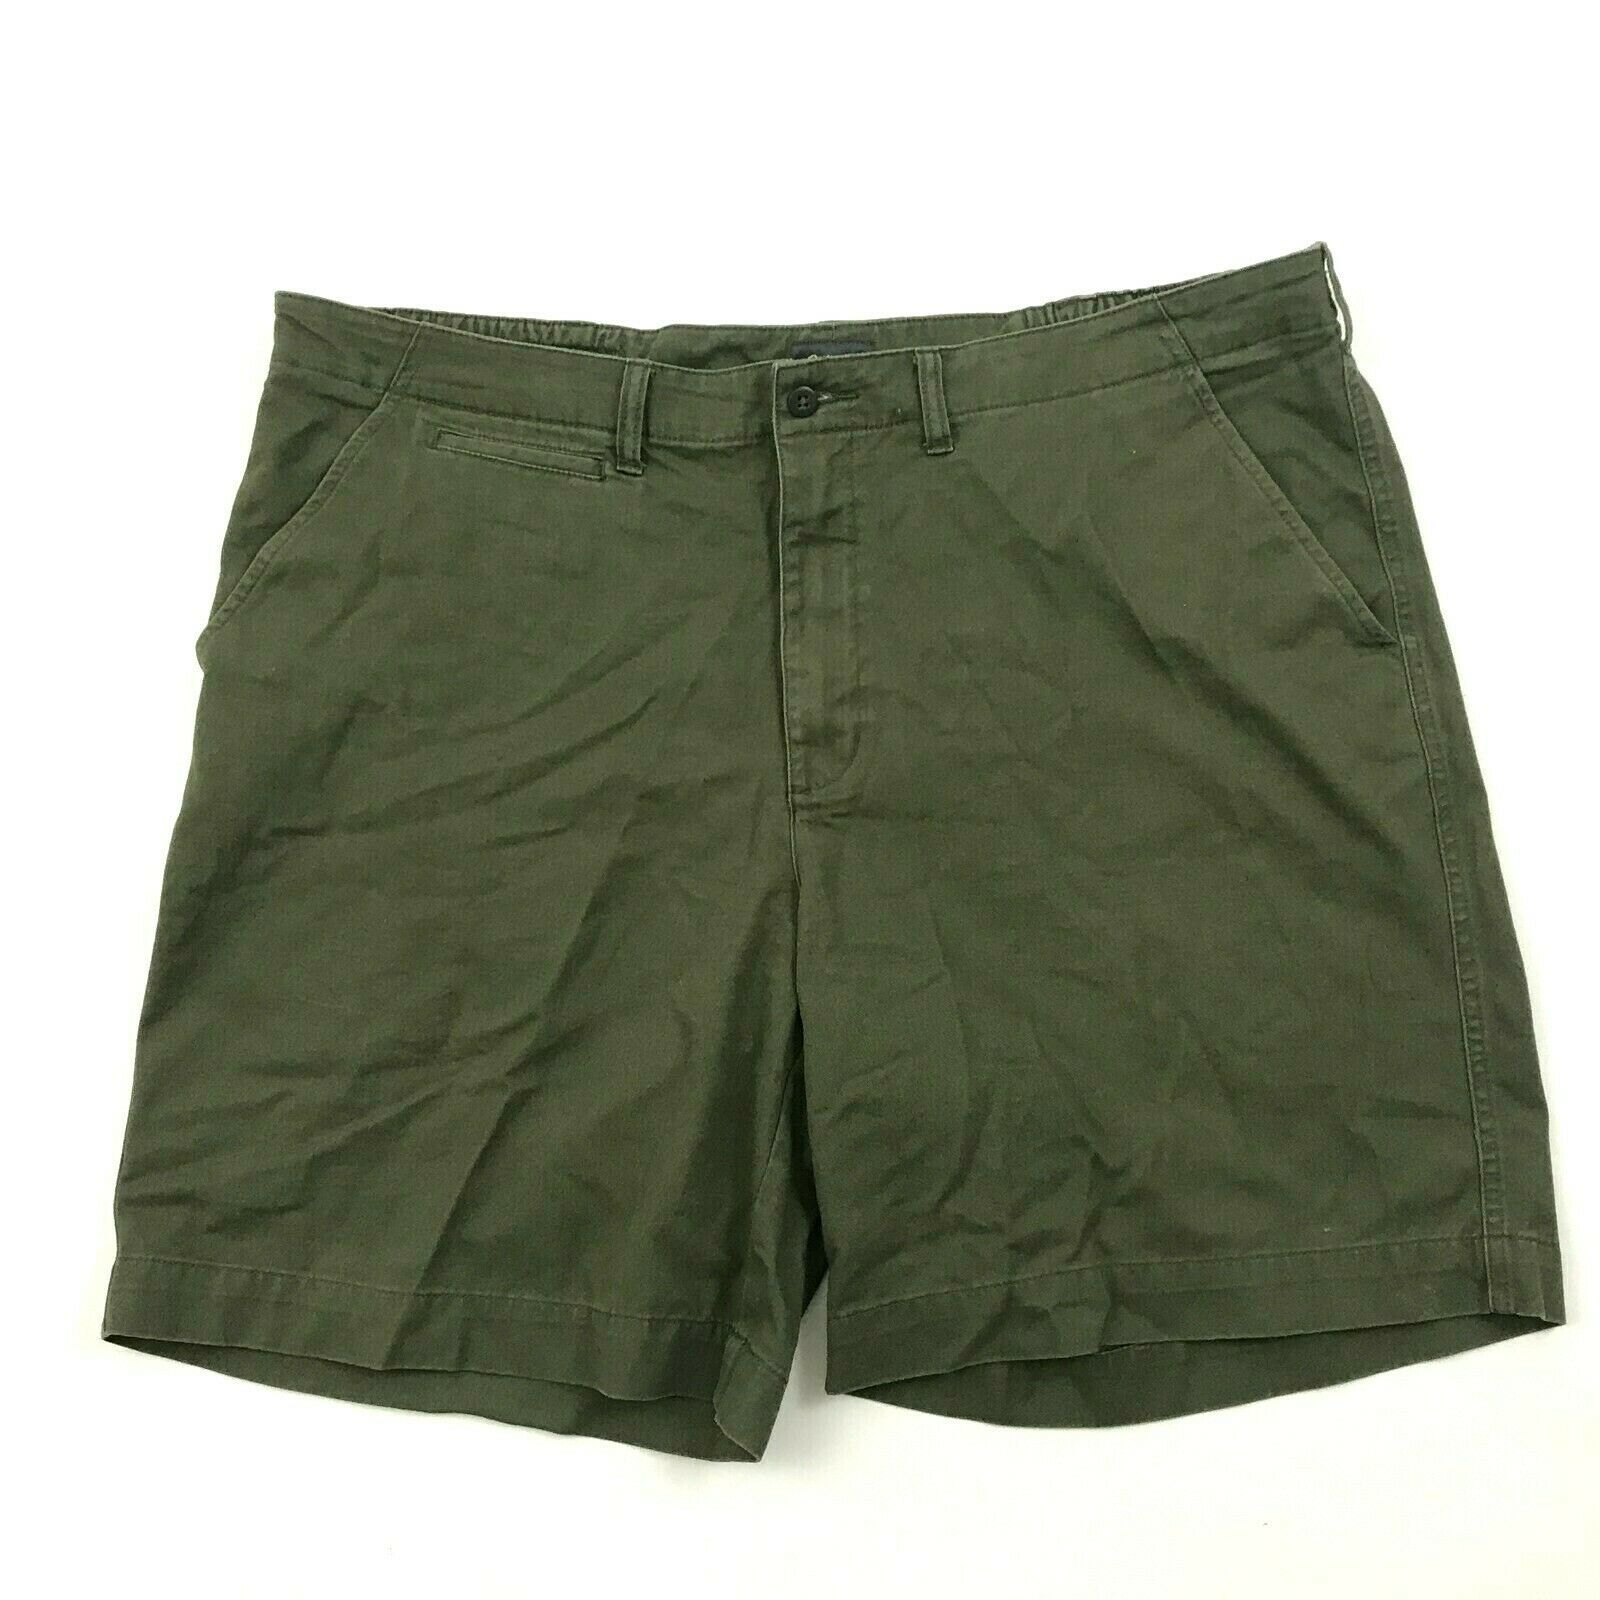 Cabela's Shorts Chinos Talla 42 Adulto Verde Oliva Caqui Informal - Shorts